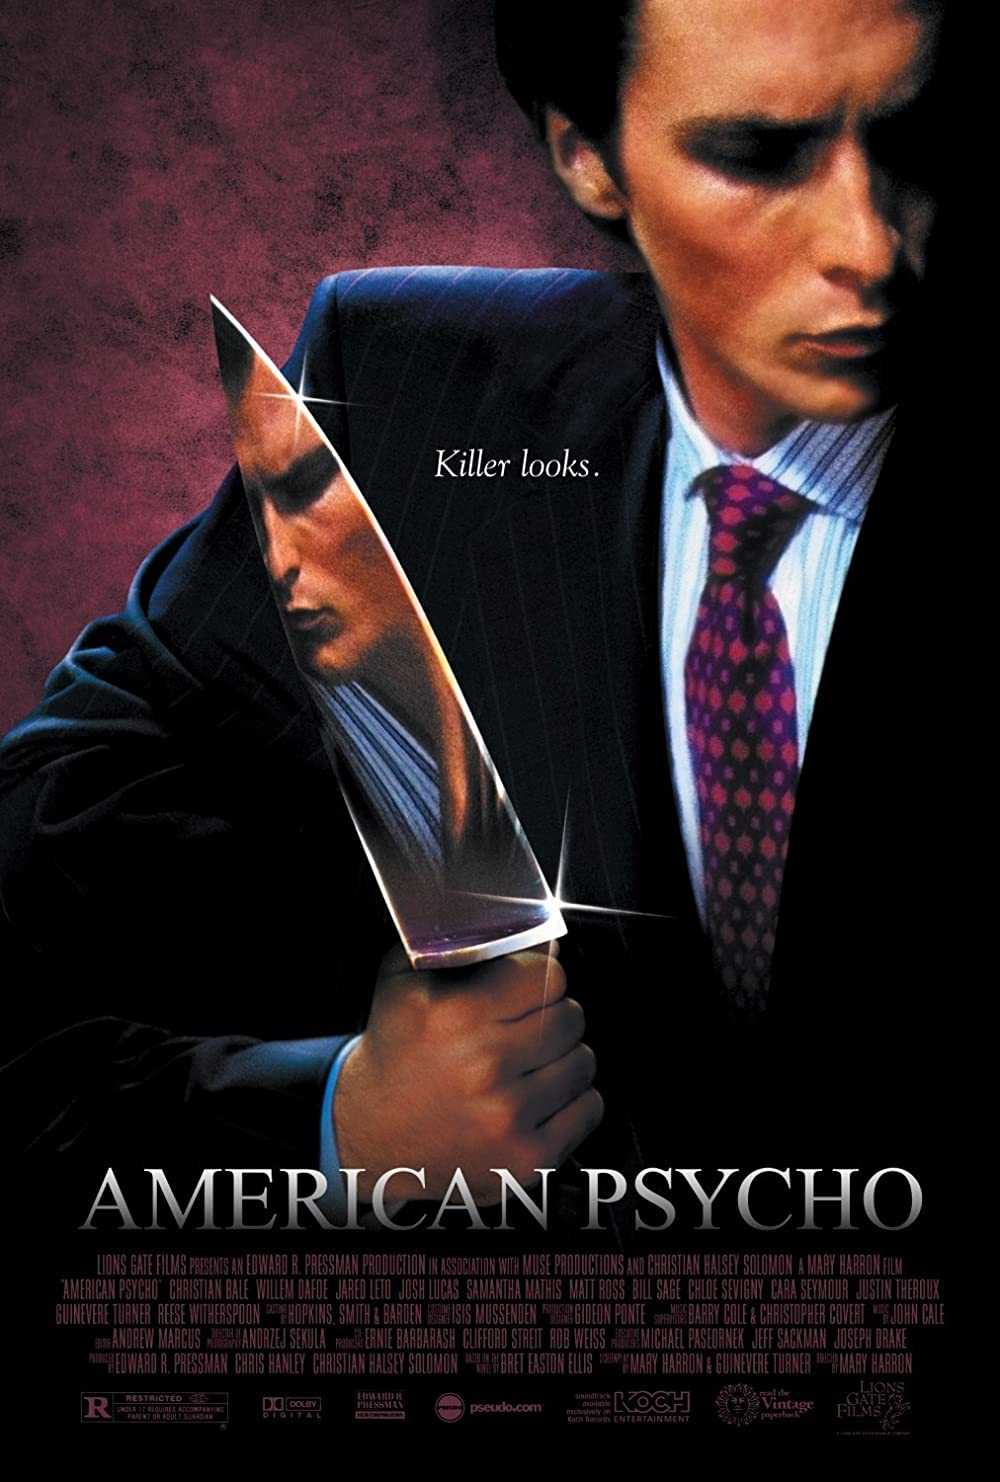 Stiahni si Filmy CZ/SK dabing American Psycho (2000)(Mastered)(Hevc)(1080p)(BluRay)(English-CZ) = CSFD 67%